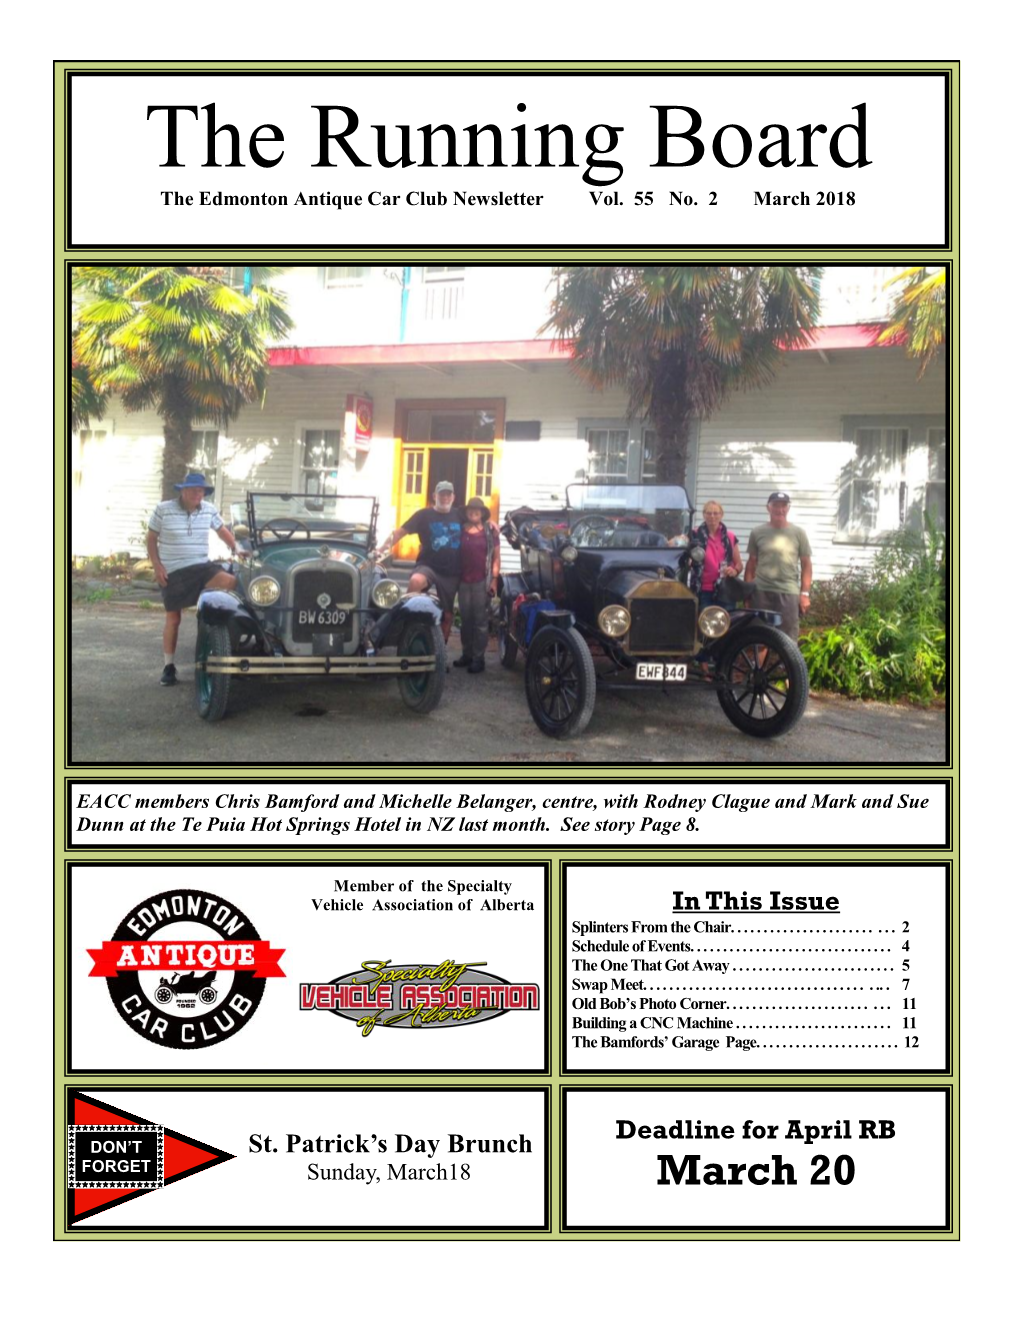 The Running Board the Edmonton Antique Car Club Newsletter Vol